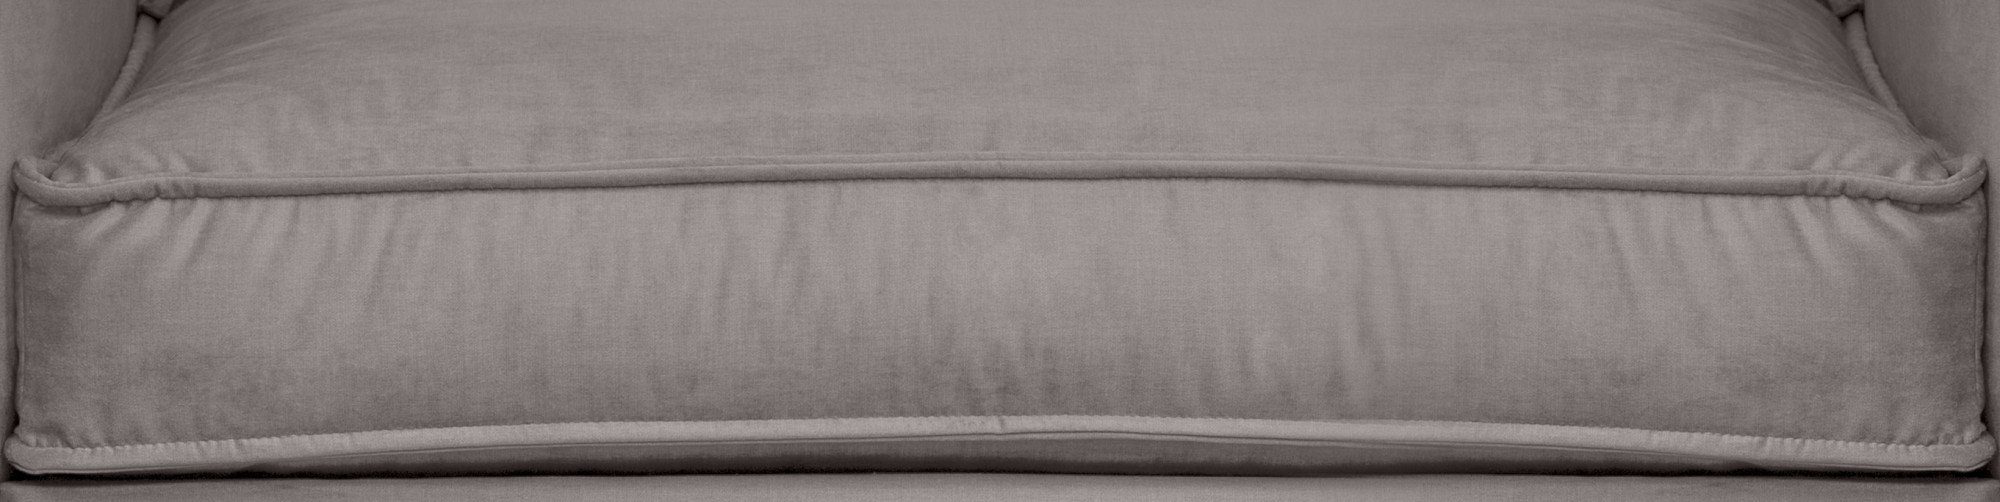 Tilques, Sessel Home viele bequeme beige Farben verfügbar affaire Sitzgelegenheiten,